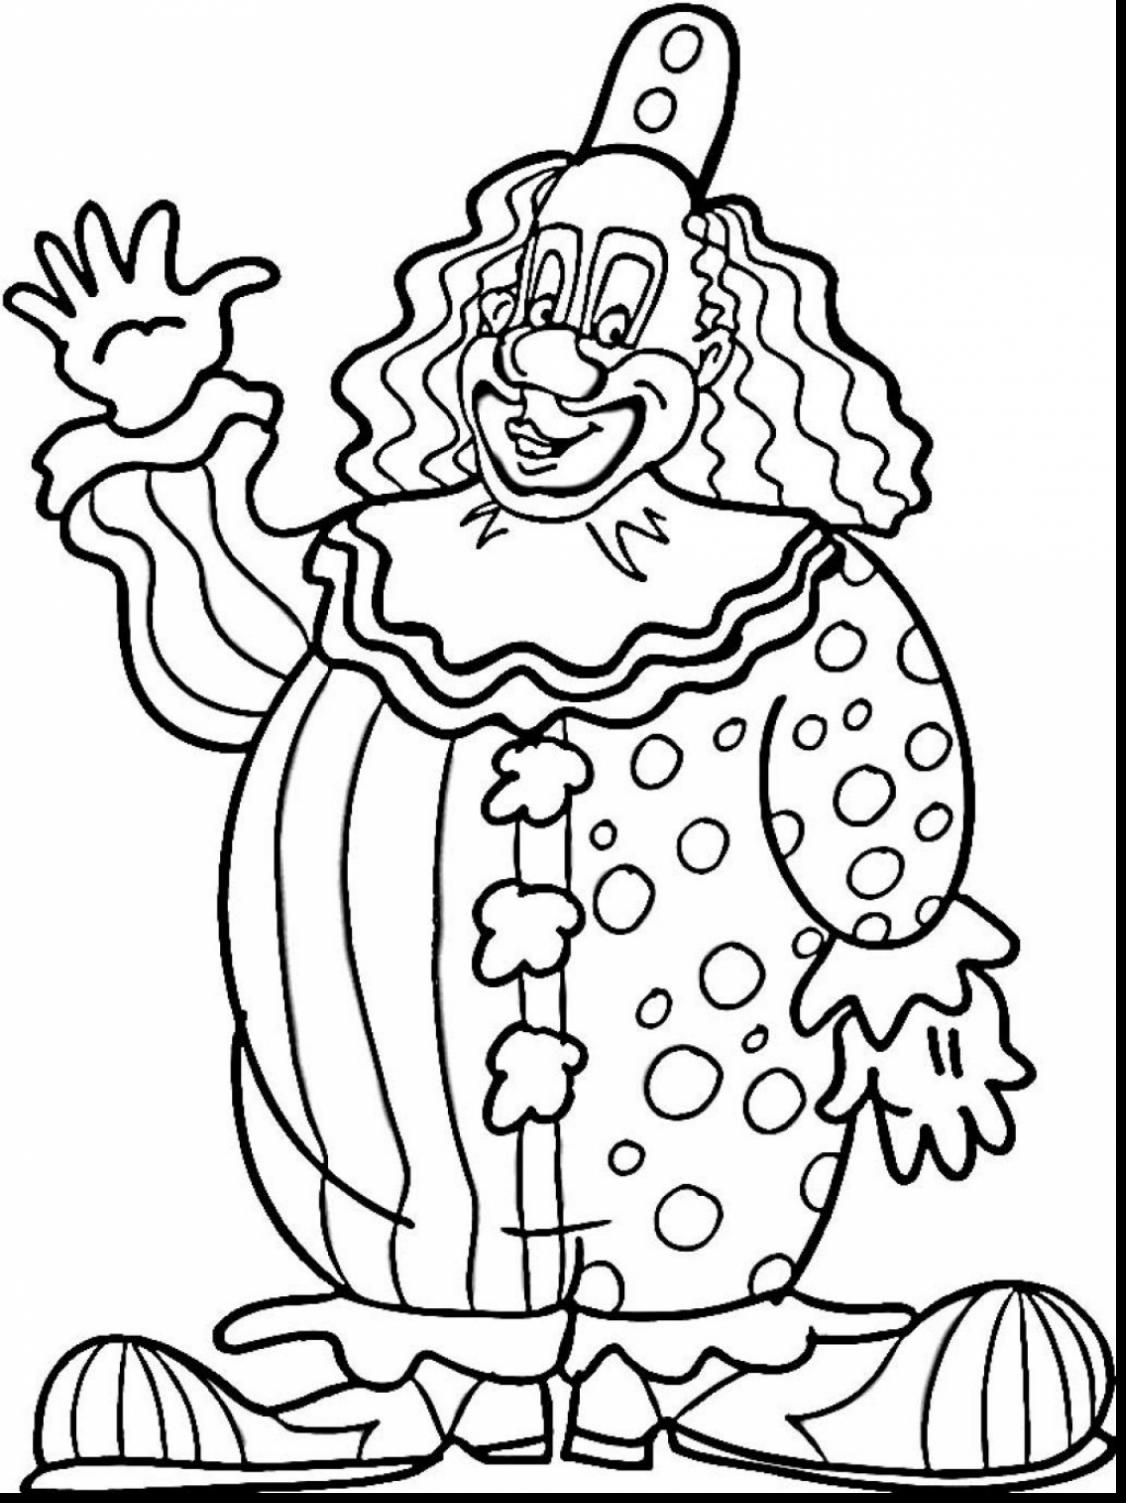 Клоун раскраска для детей 4 5. Клоун раскраска. Клоун раскраска для детей. Веселый клоун раскраска. Раскраска весёлый клоун для детей.